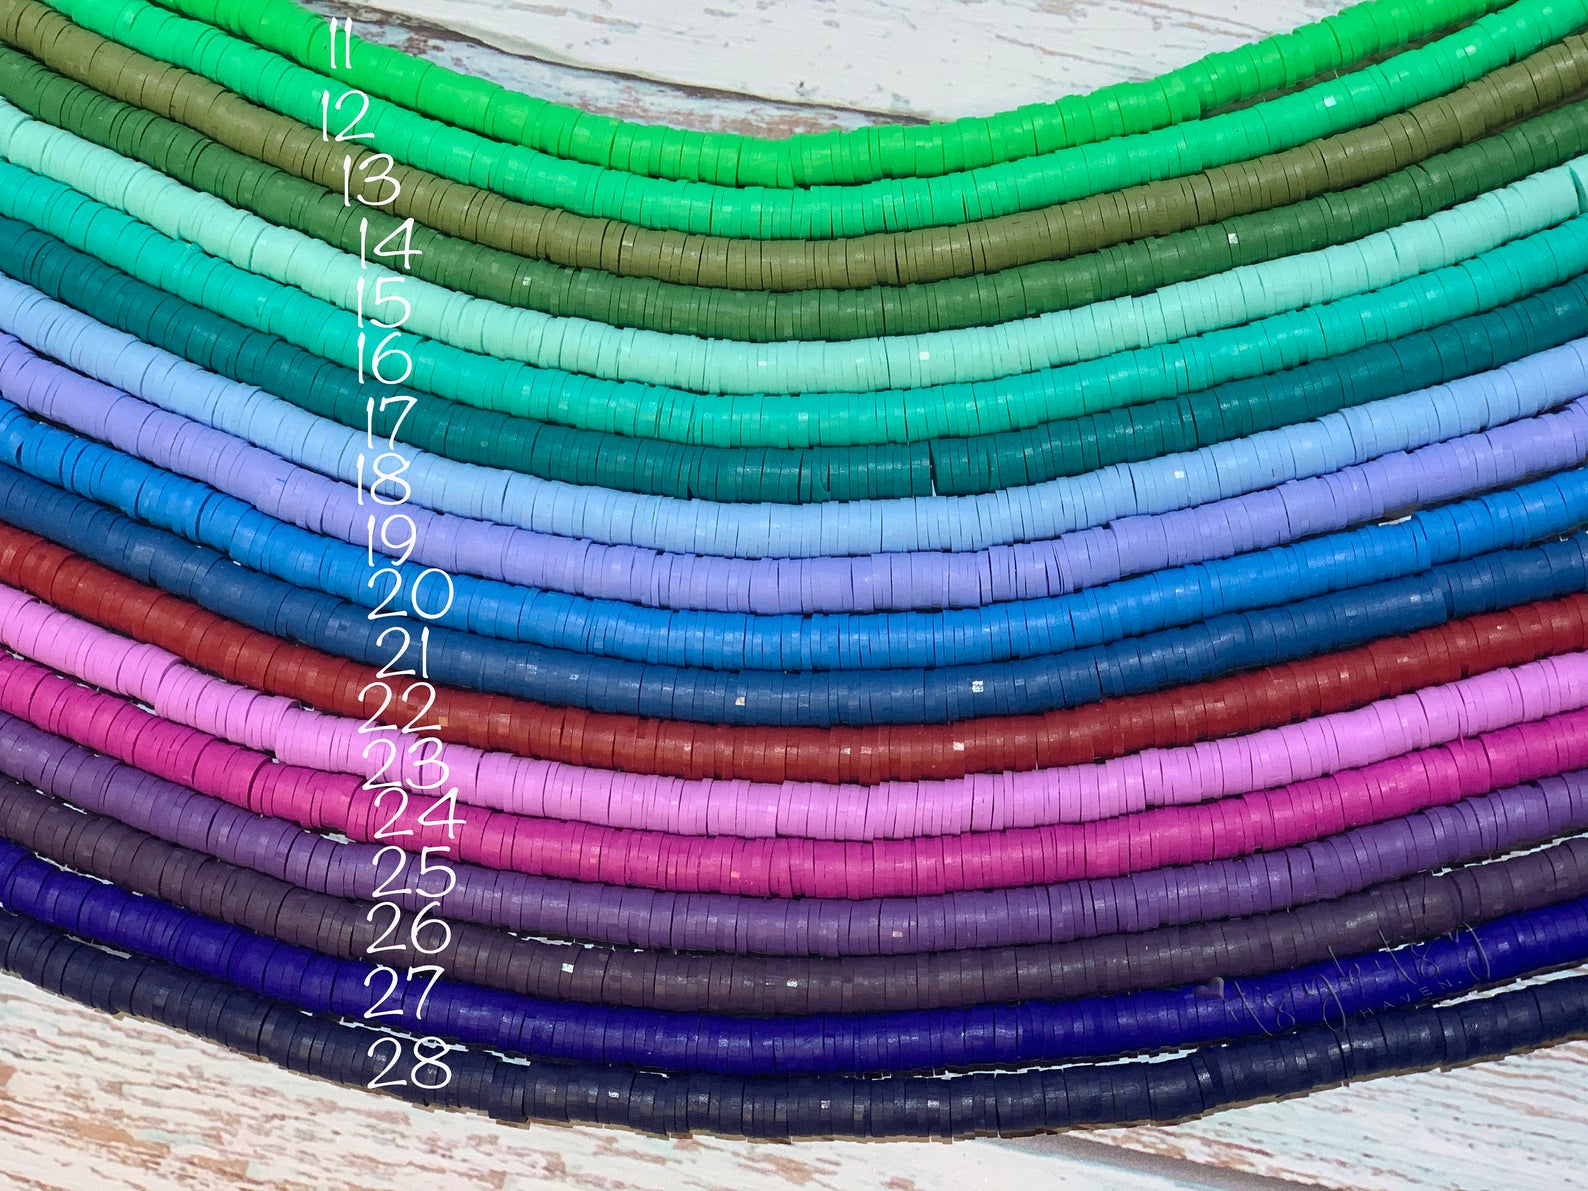 1 Strand, 4mm, Heishi Beads, Environmental Handmade Polymer Clay Beads, Disc/Flat Round